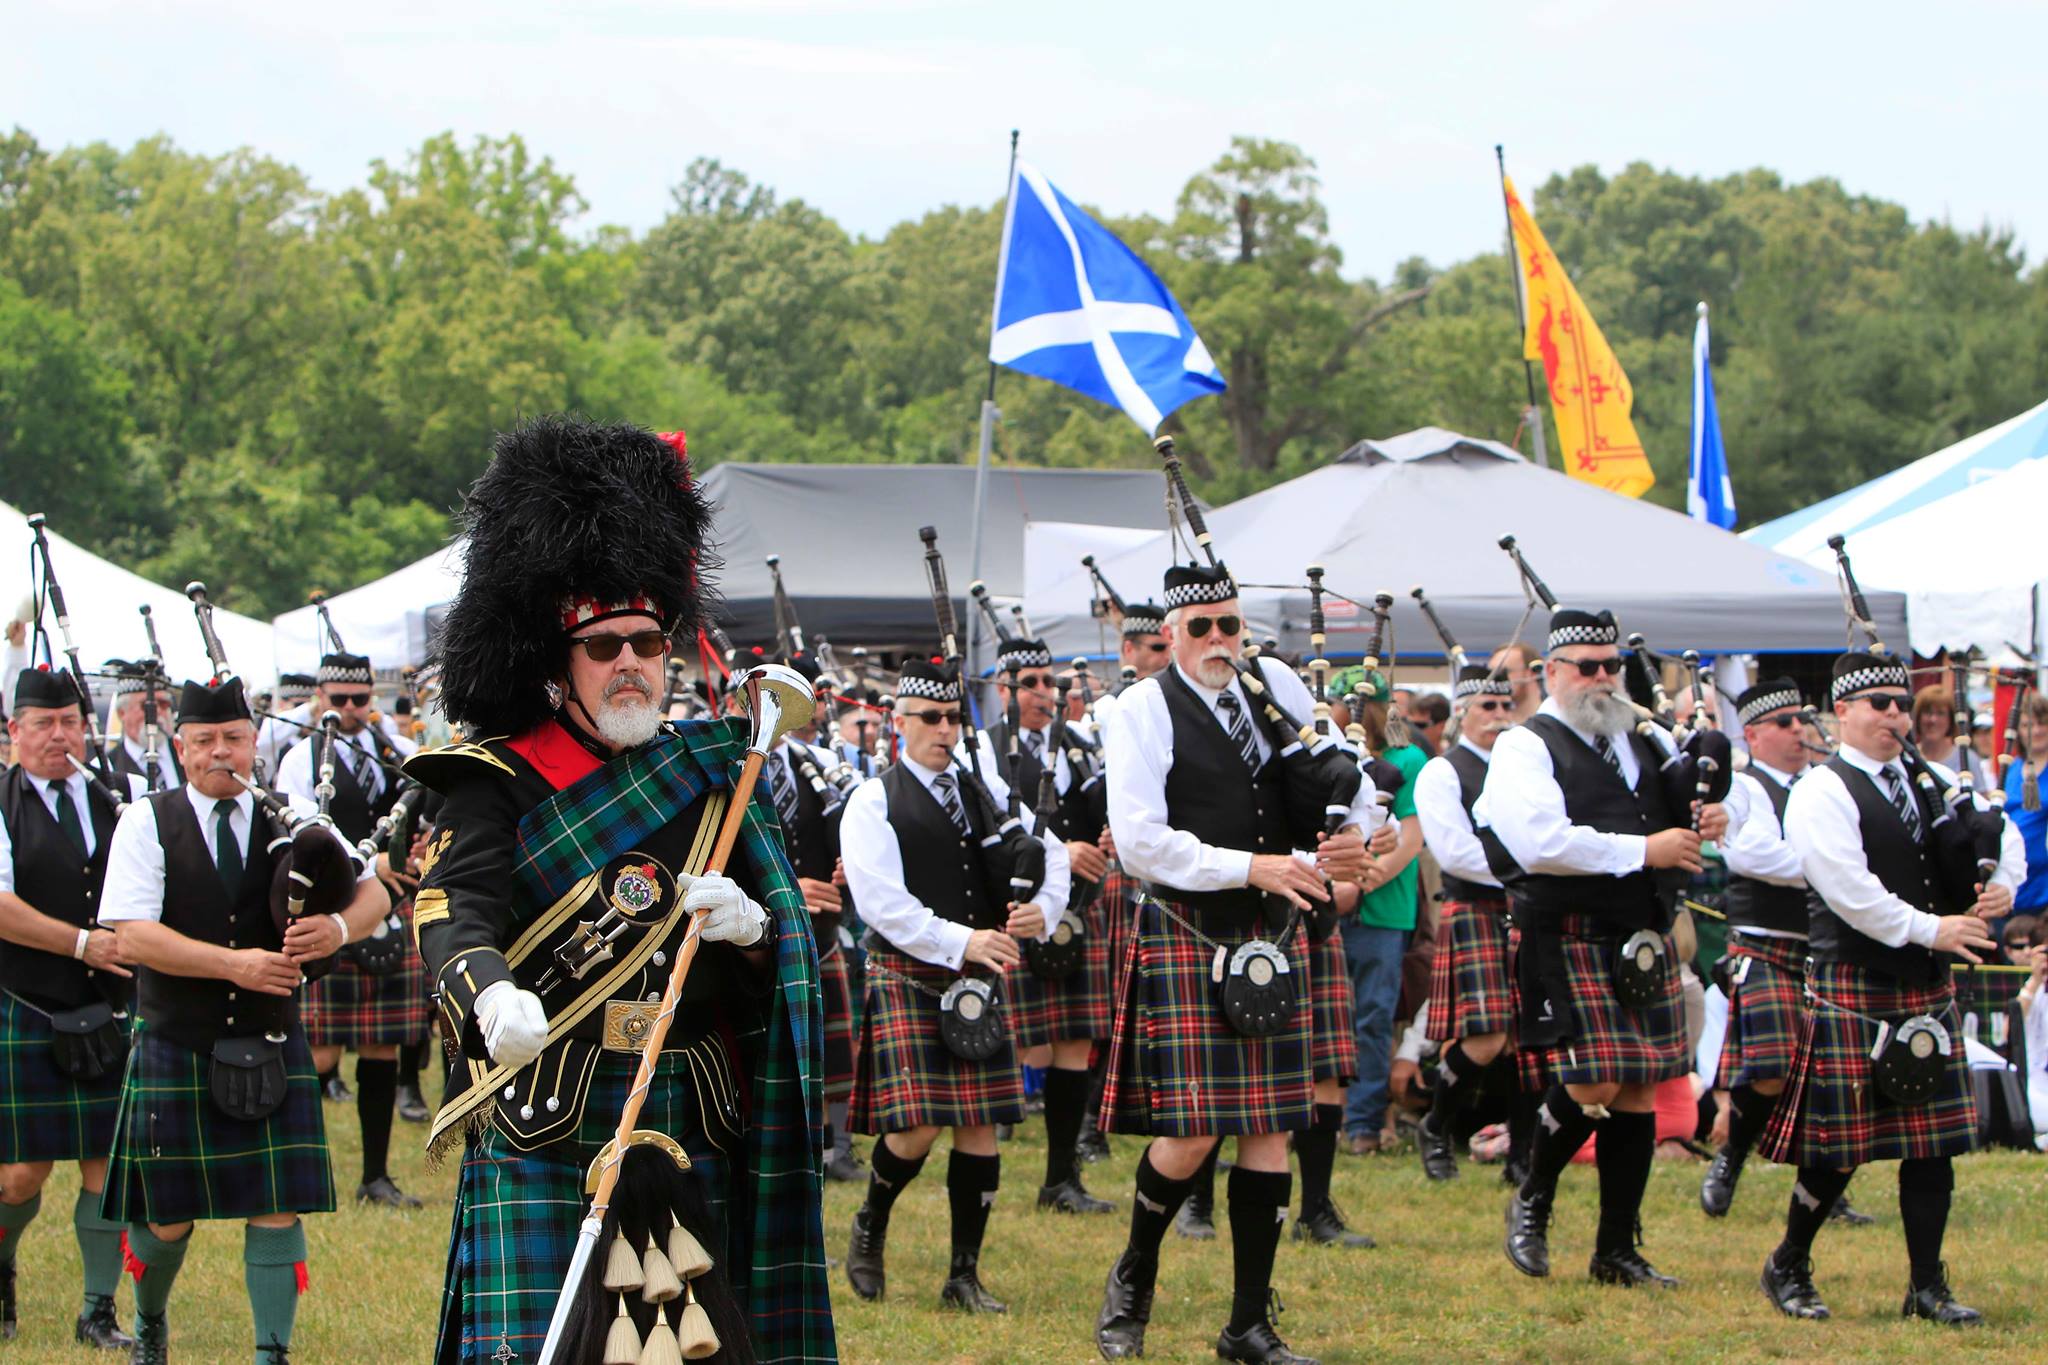 Scottish Festival and Games